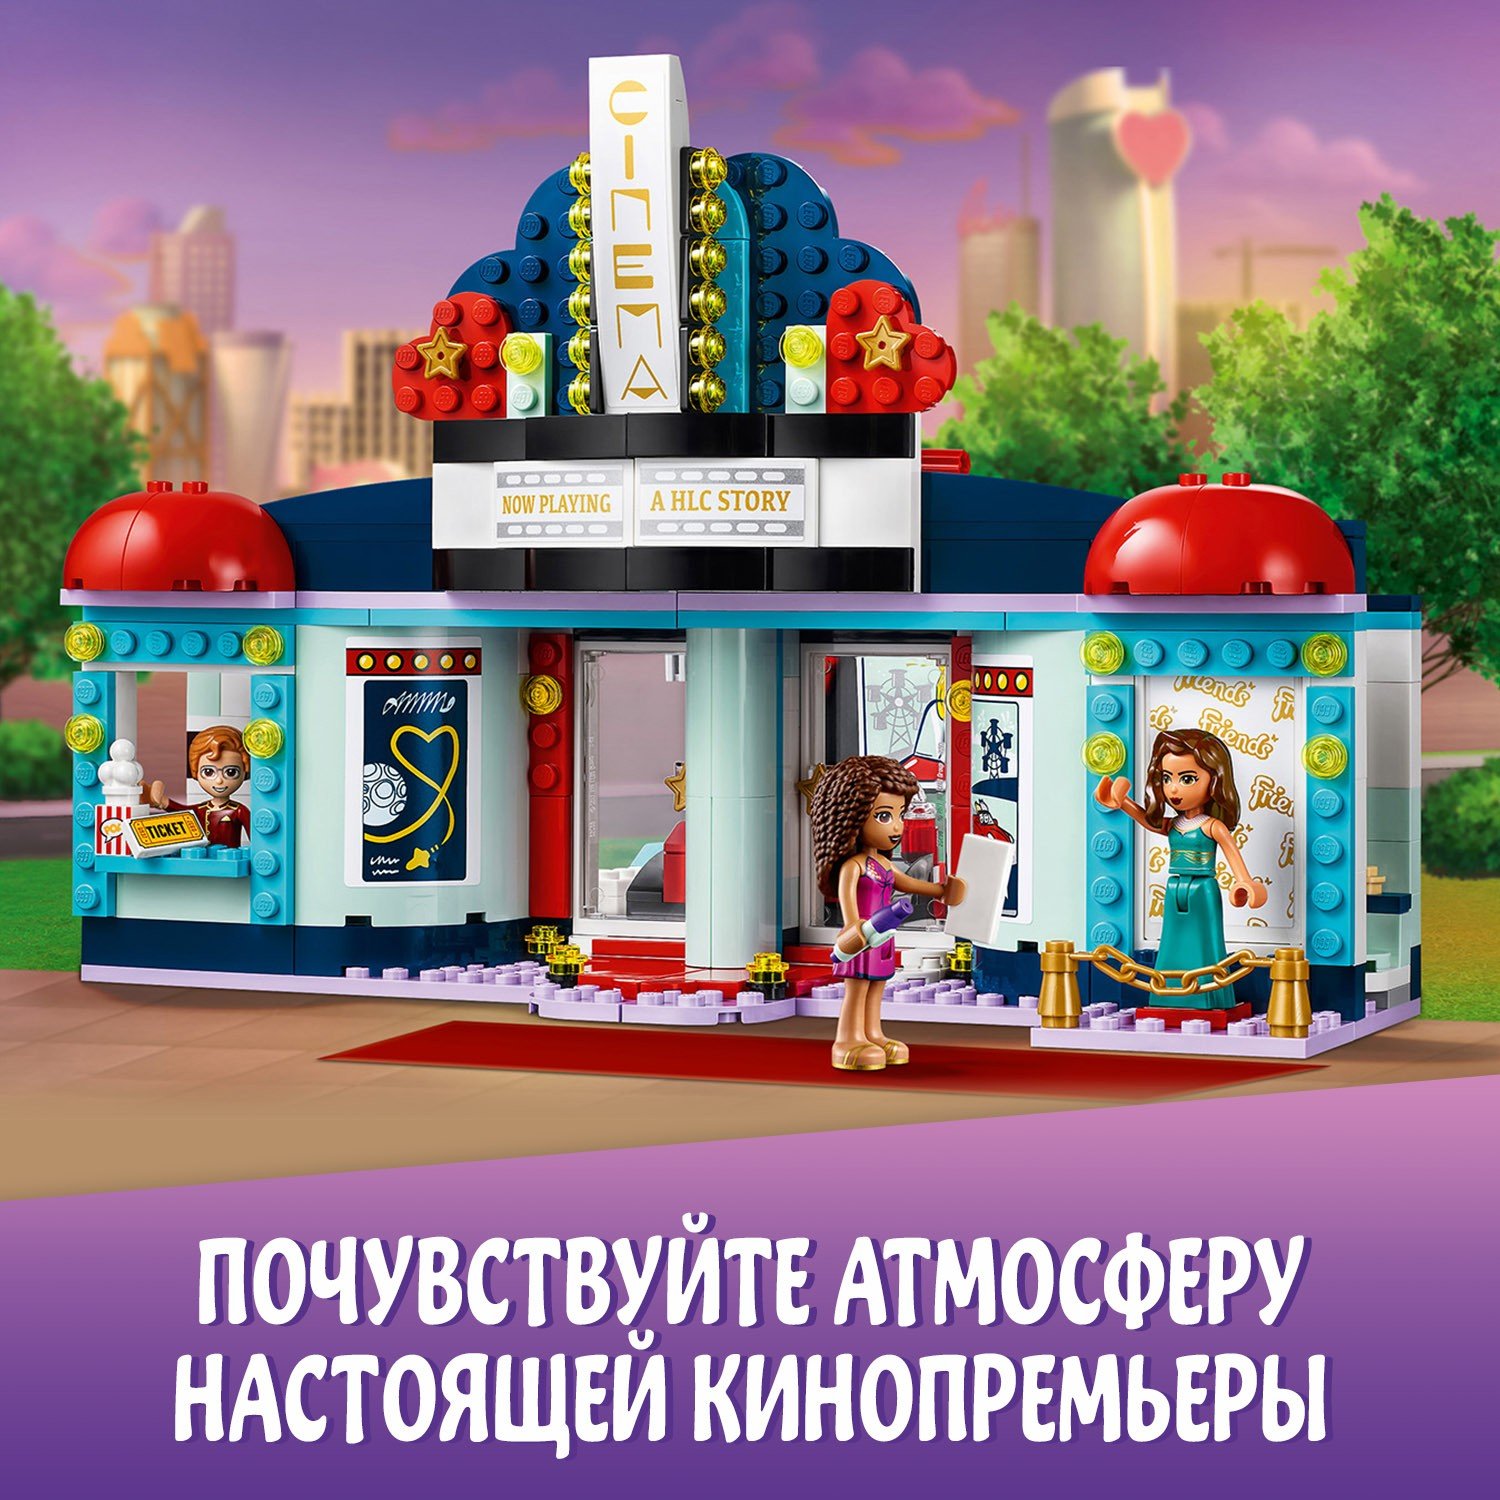 Конструктор LEGO Friends 41448 Кинотеатр Хартлейк-Сити